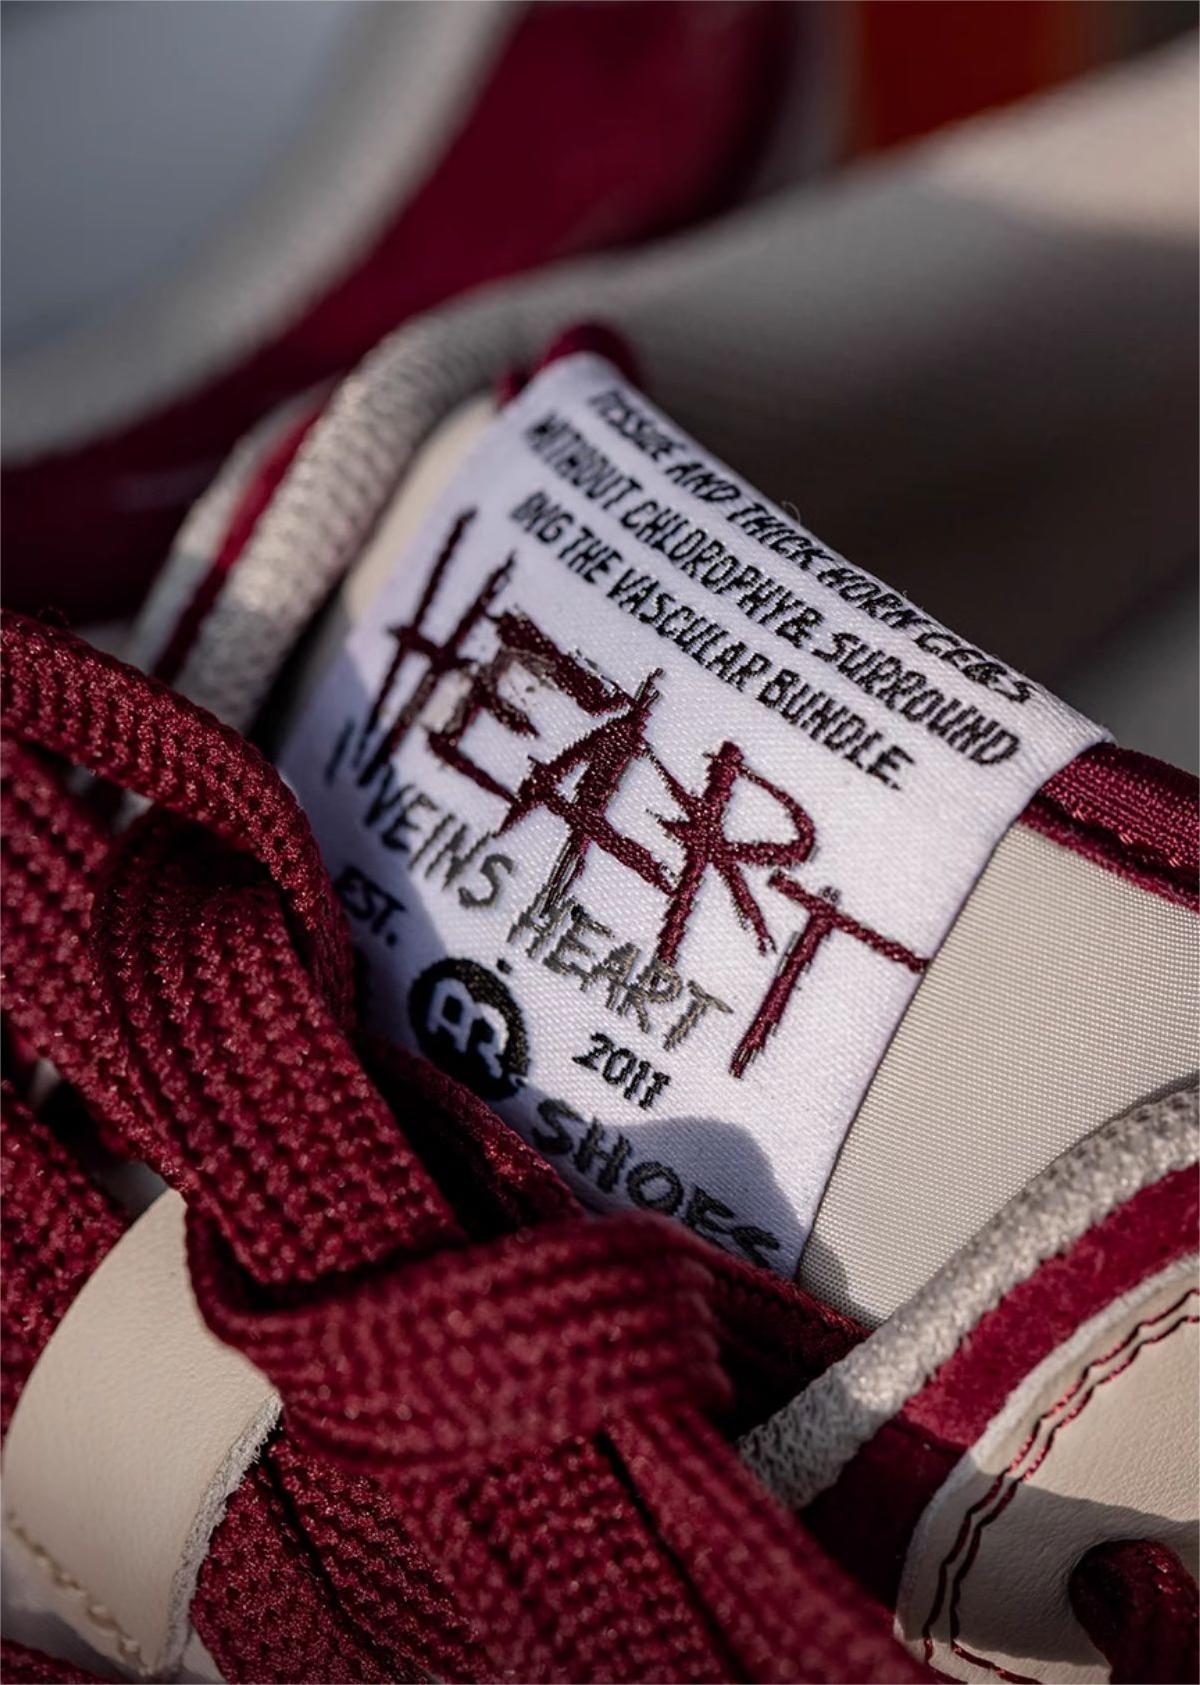 'VEINS HEART' Shoes - Santo 